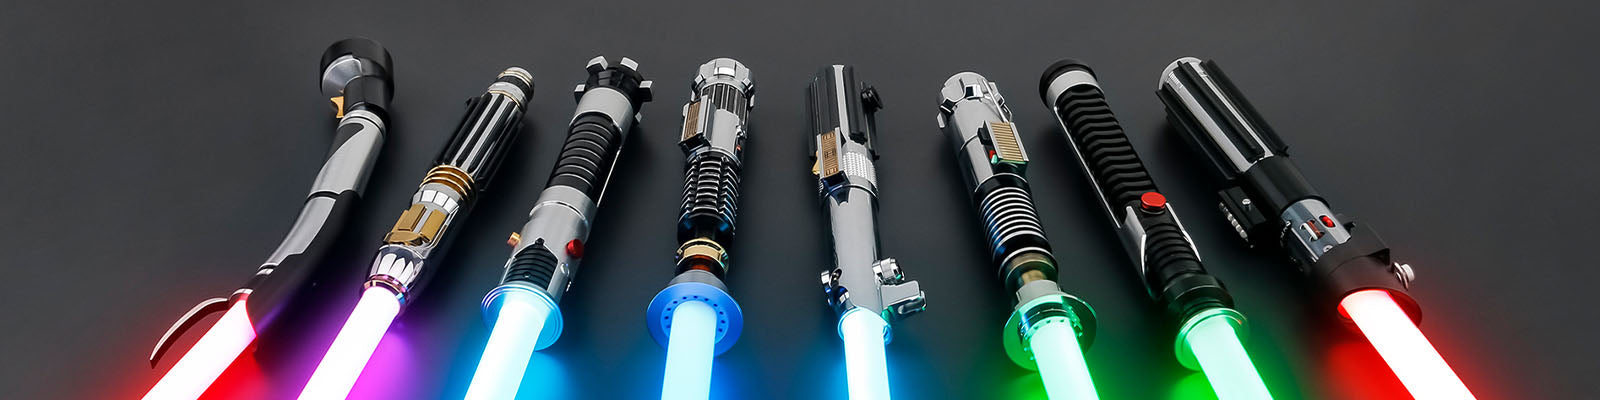 Star Wars lightsaber replica